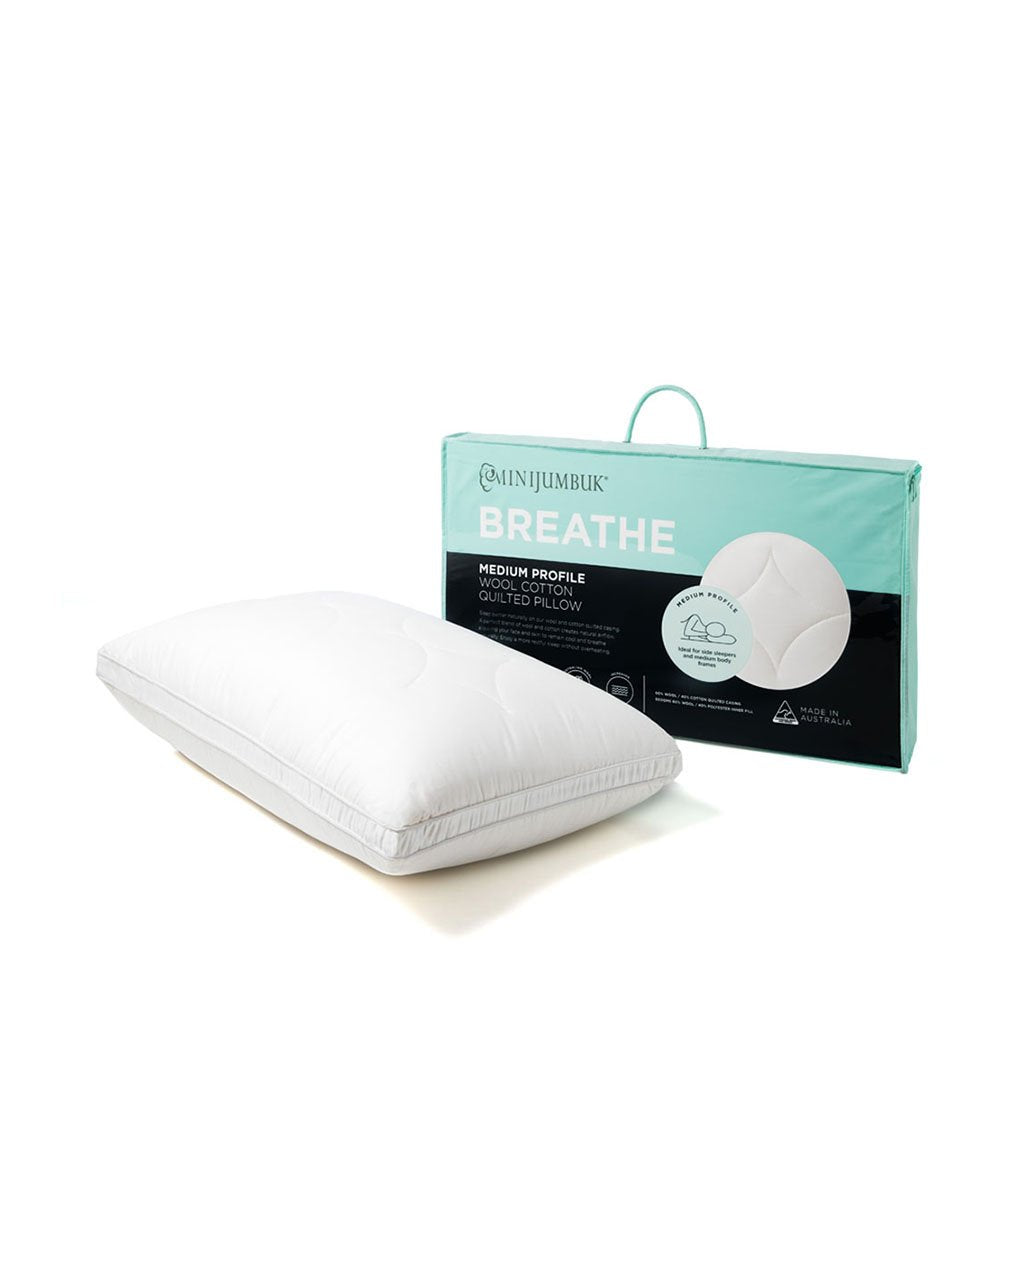 MiniJumbuk Breathe Pillow - Product and Pack